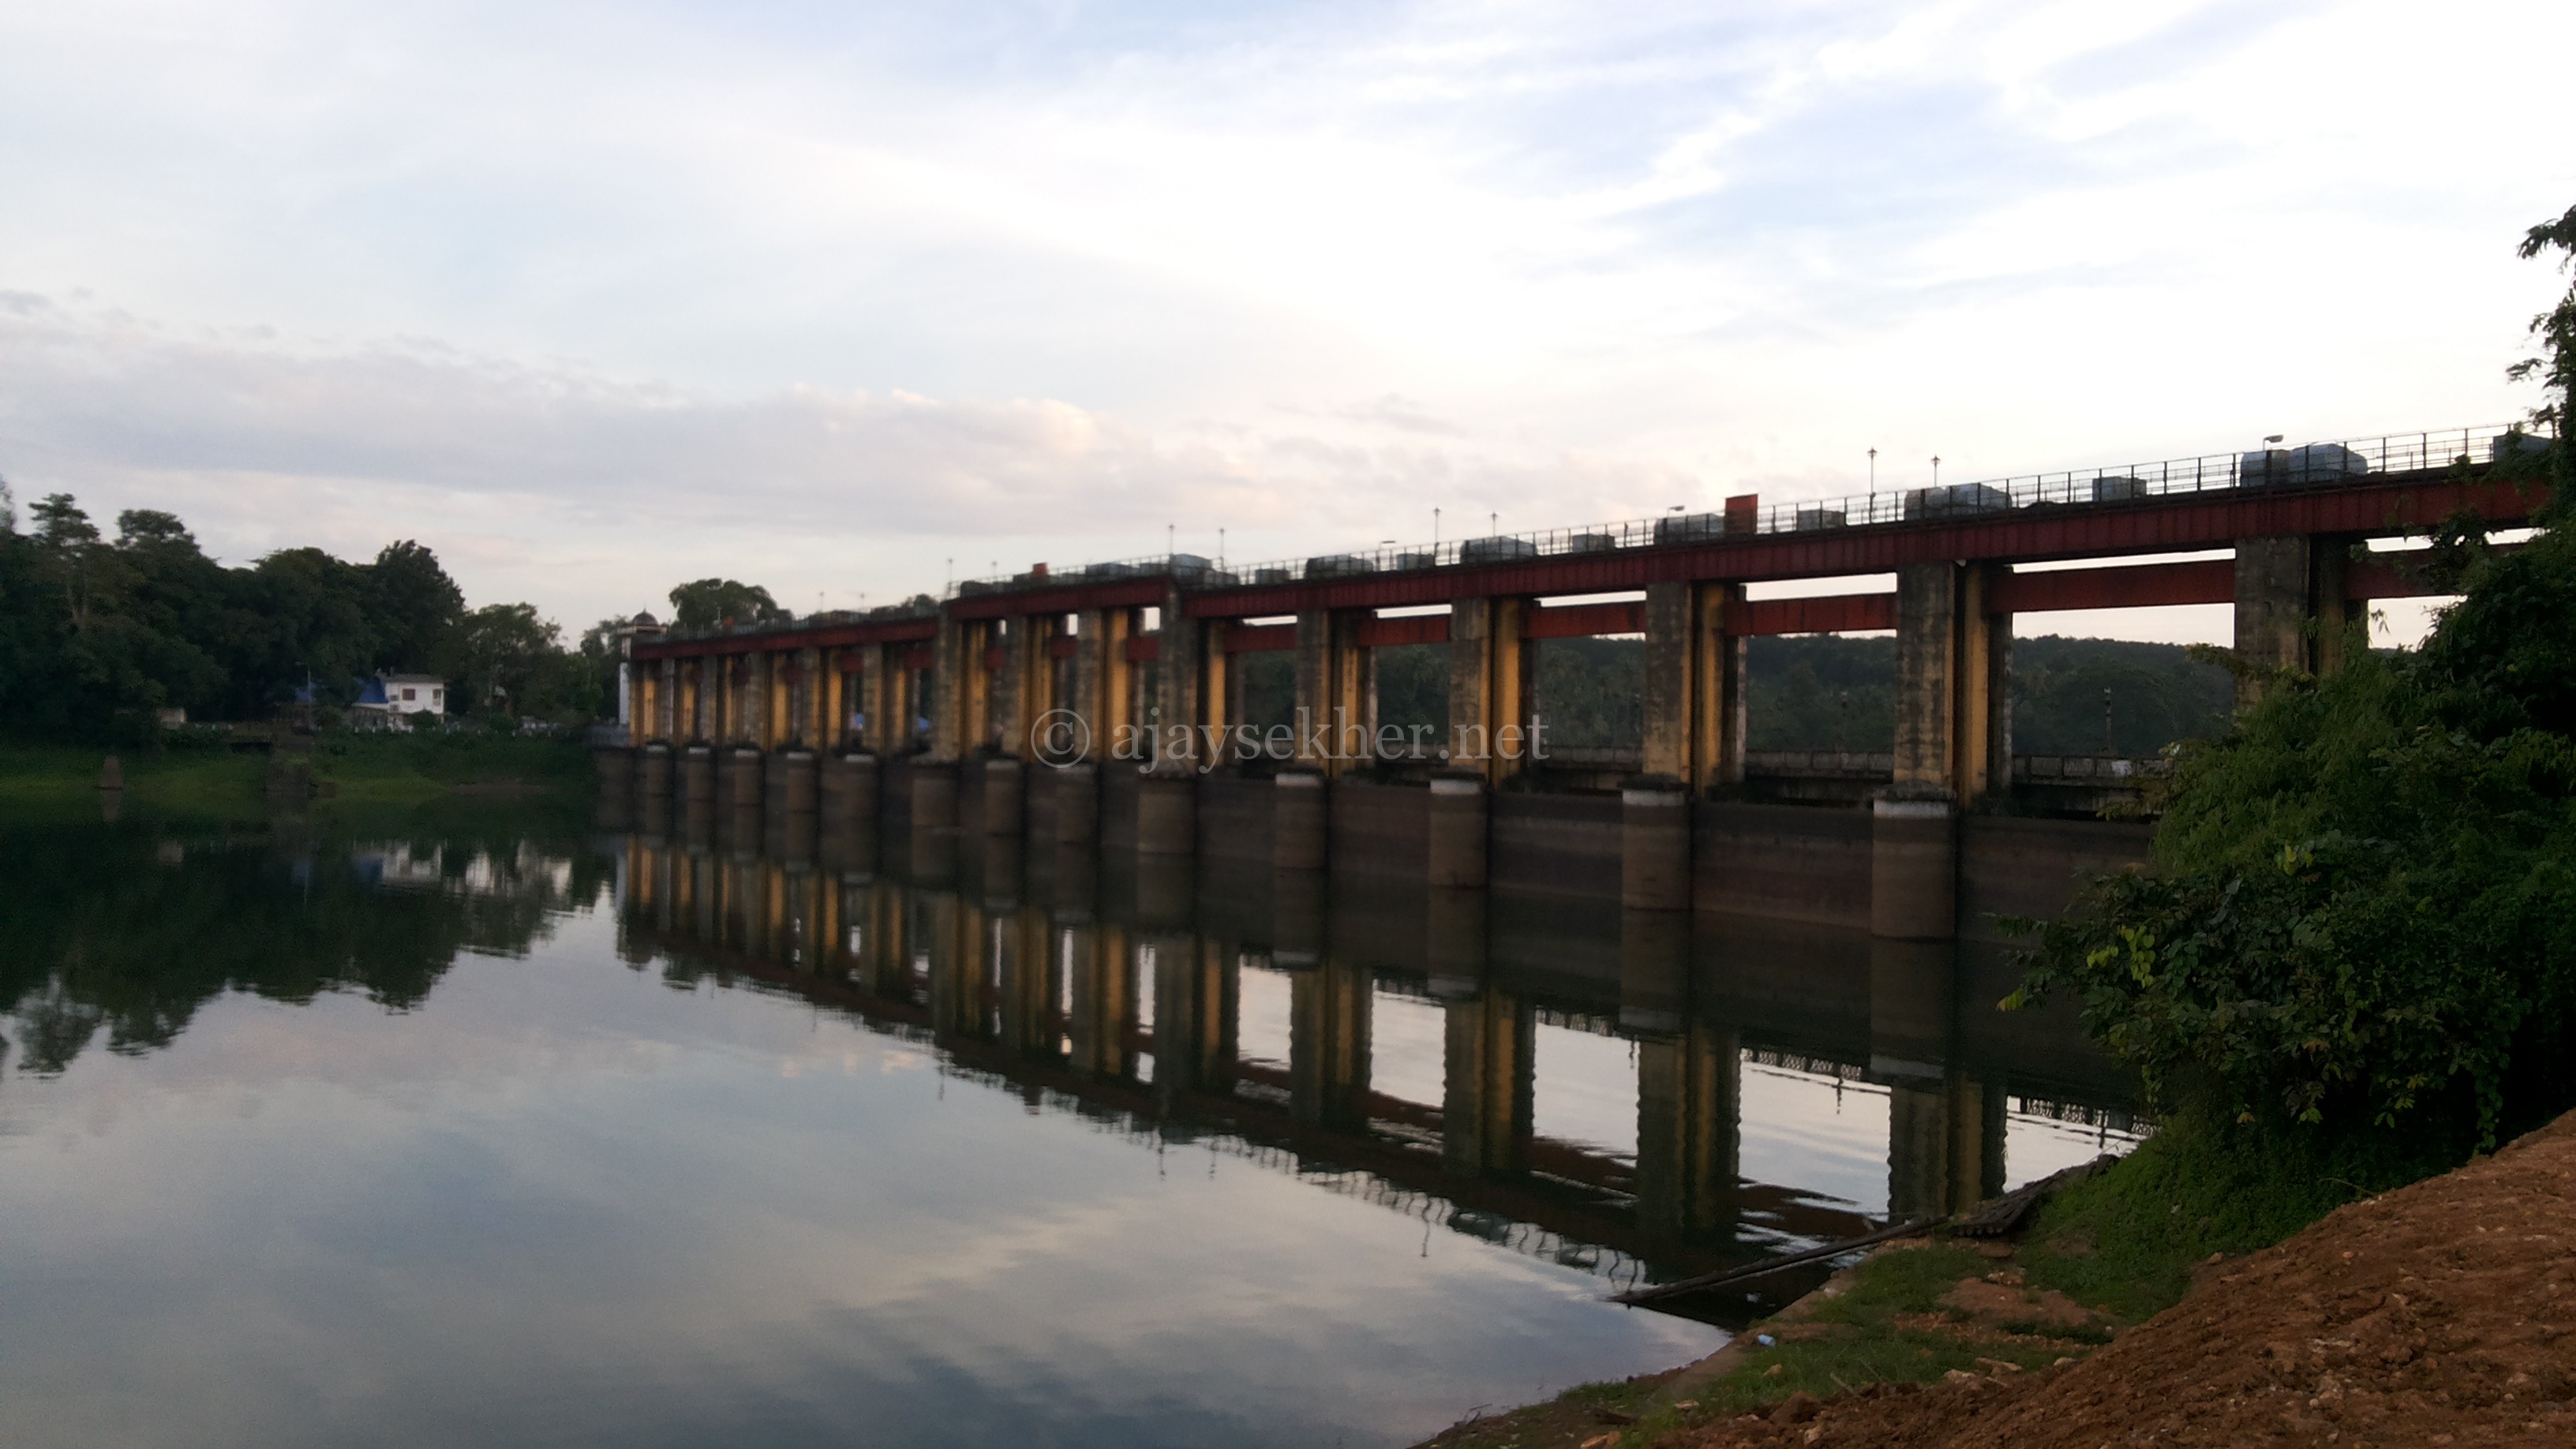 Bhoothathankettu barrage across Periyar near Kotamangalam in Ernakulam district of Kerala